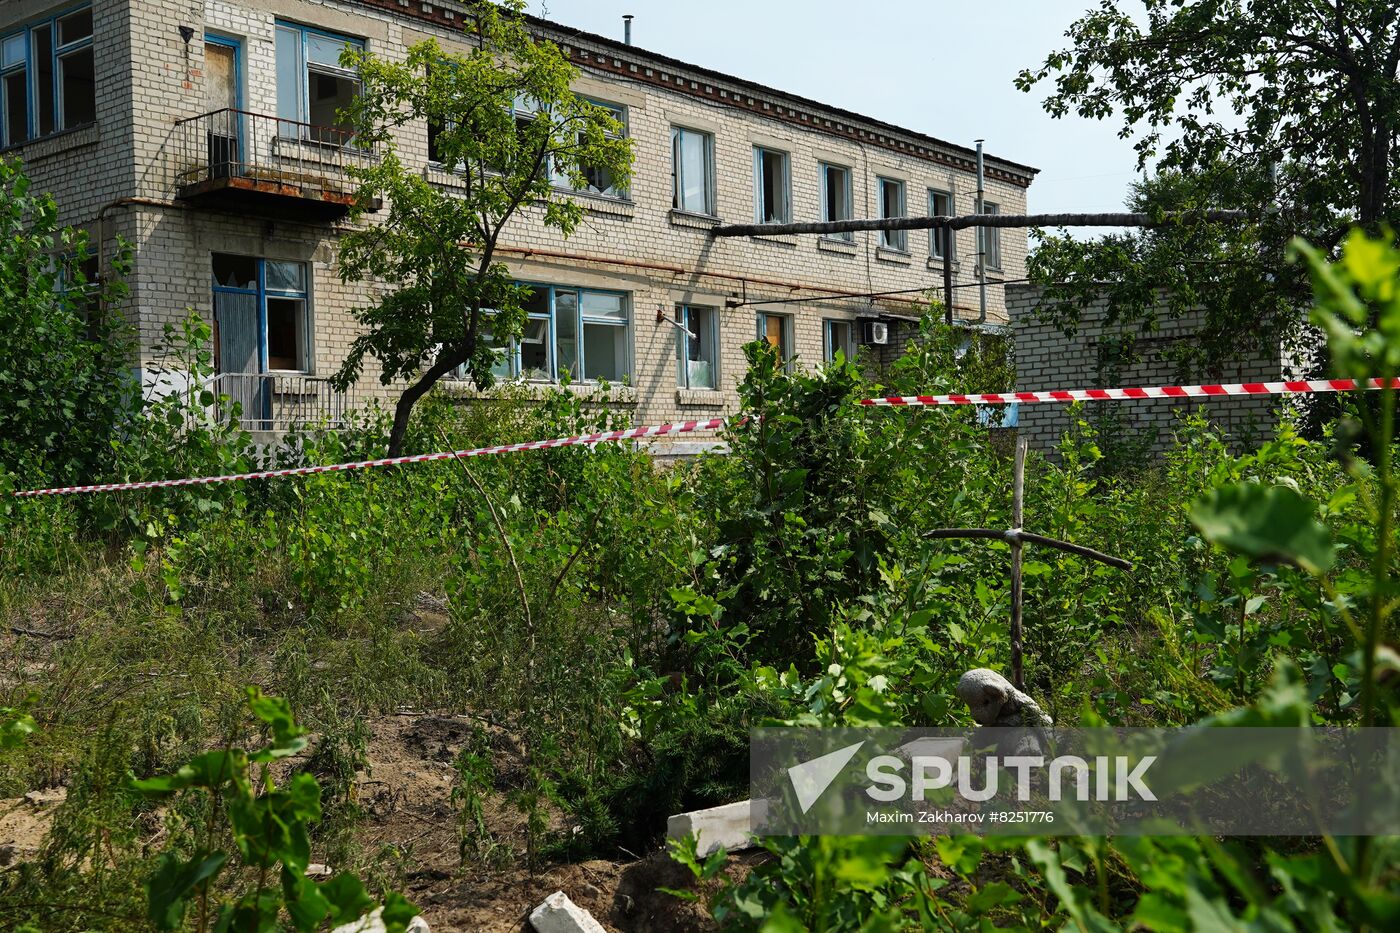 LPR Russia Ukraine Military Operation Exhumation